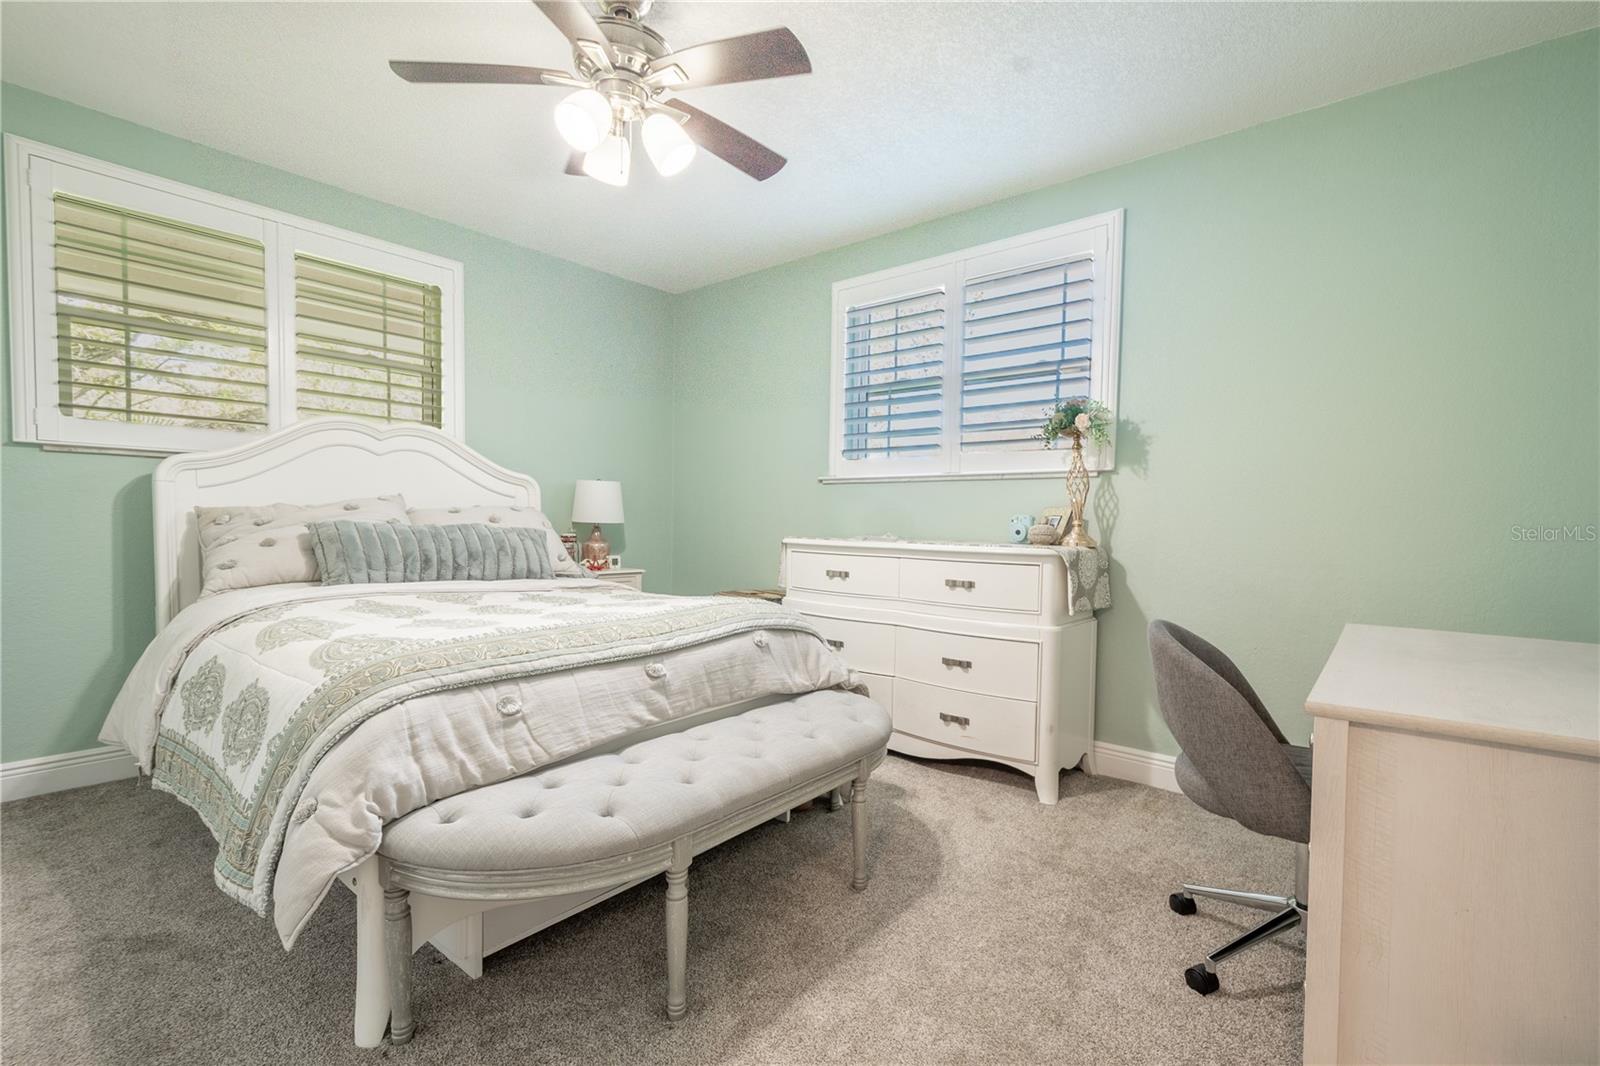 Bedroom 4 features neutral tones, plush carpet, plantation shutters, a ceiling fan and built-in closet.